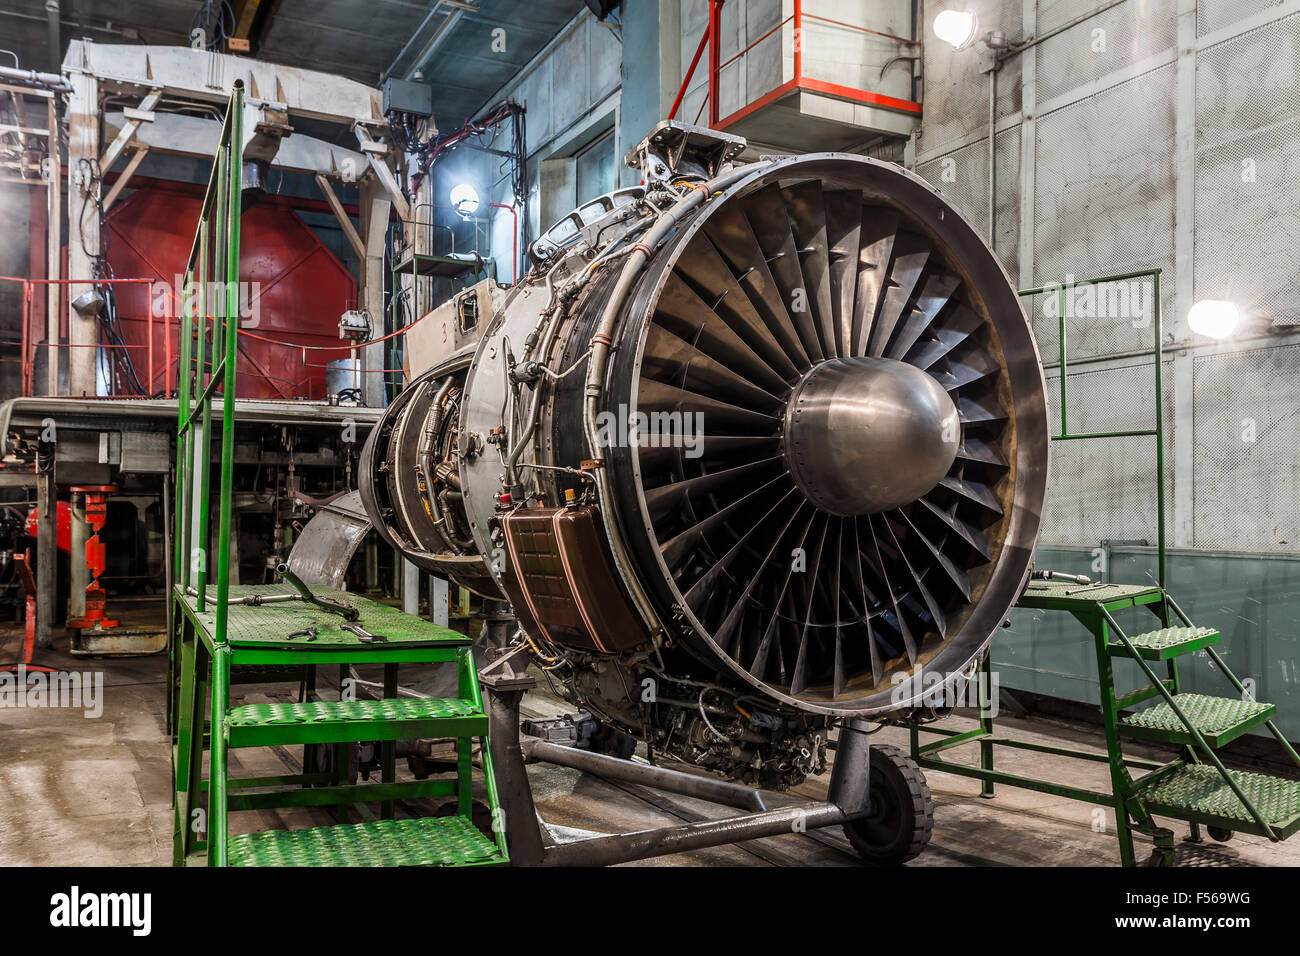 Airplane gas turbine engine detail in hangar Stock Photo - Alamy